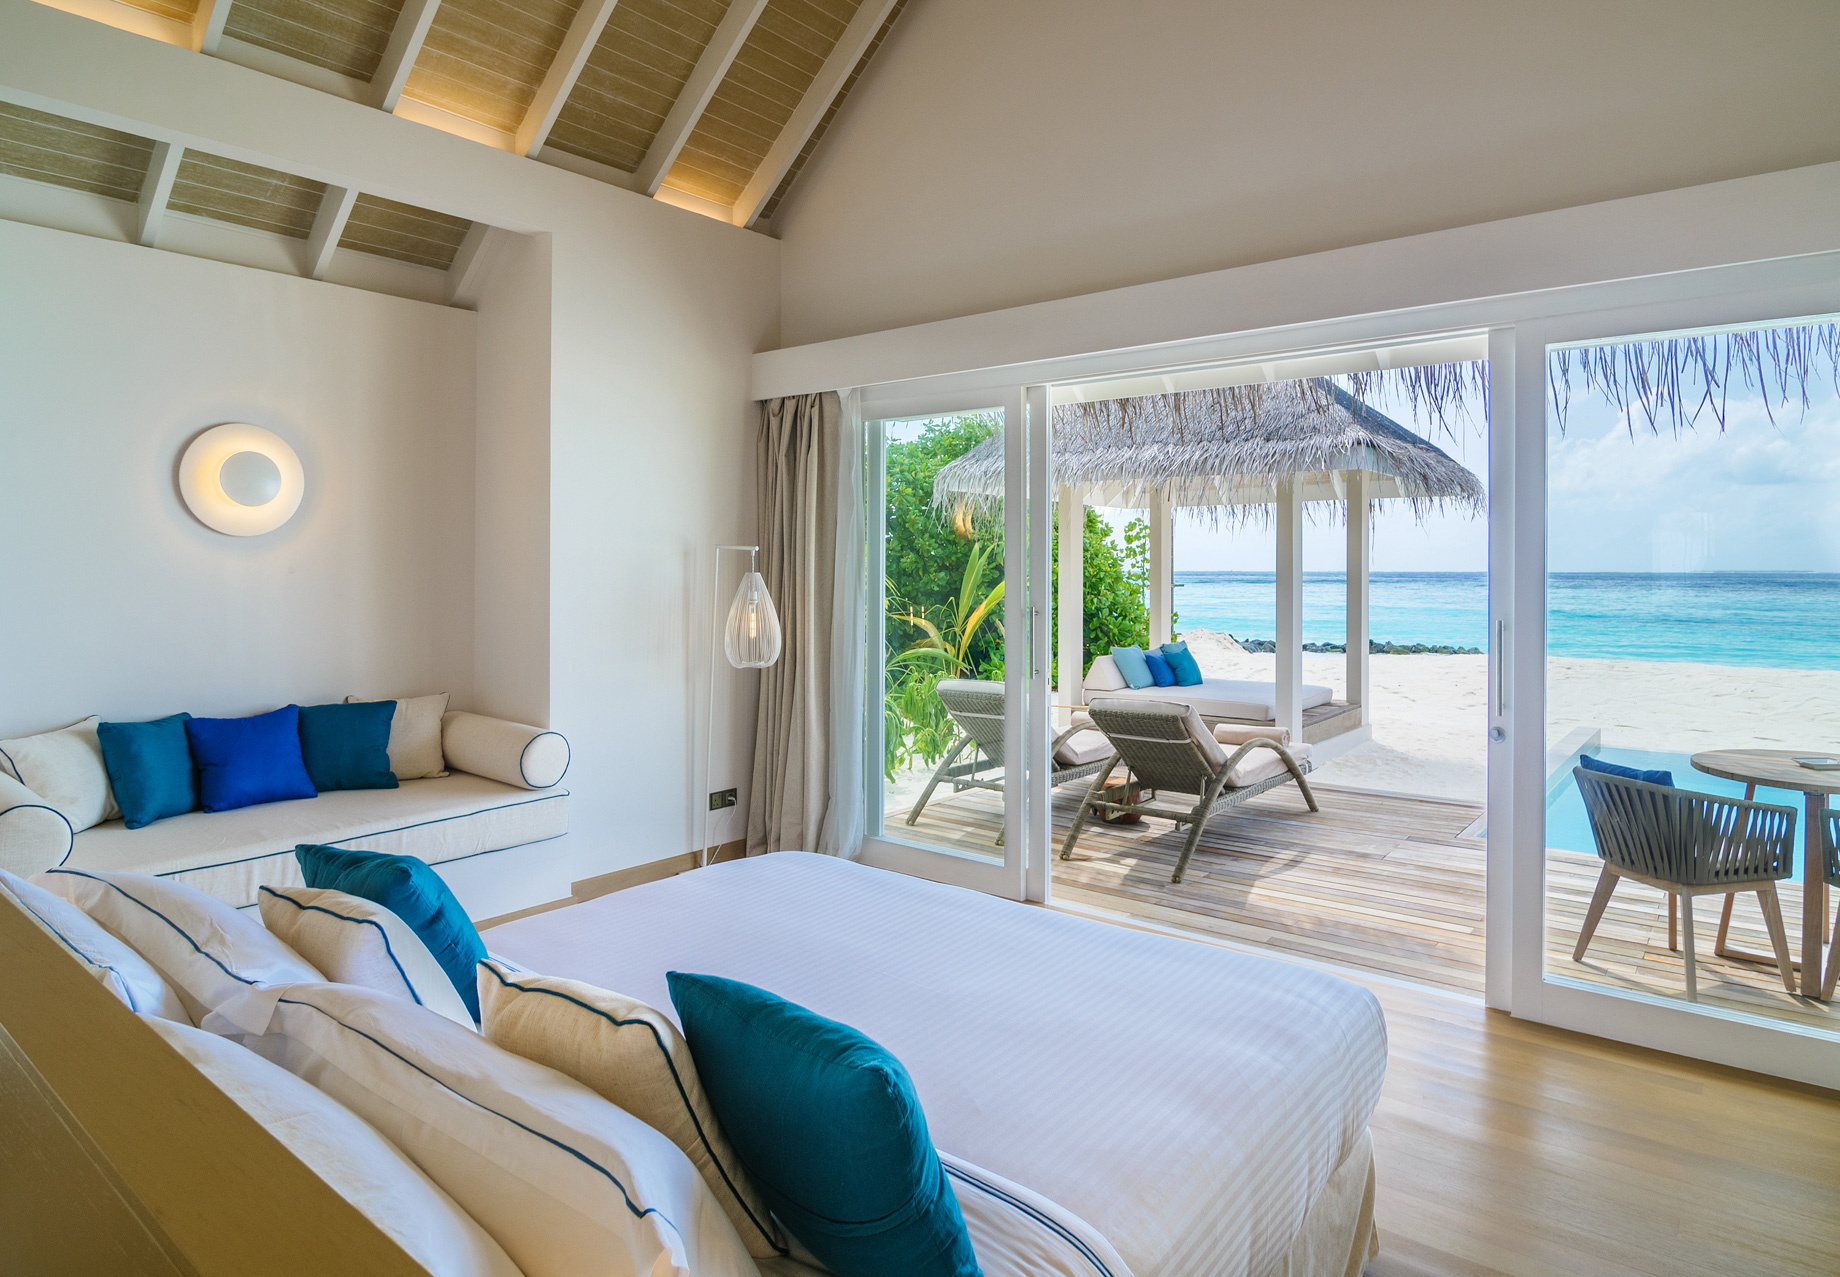 Baglioni Resort Maldives – Maagau Island, Rinbudhoo, Maldives – Beach Villa Bedroom